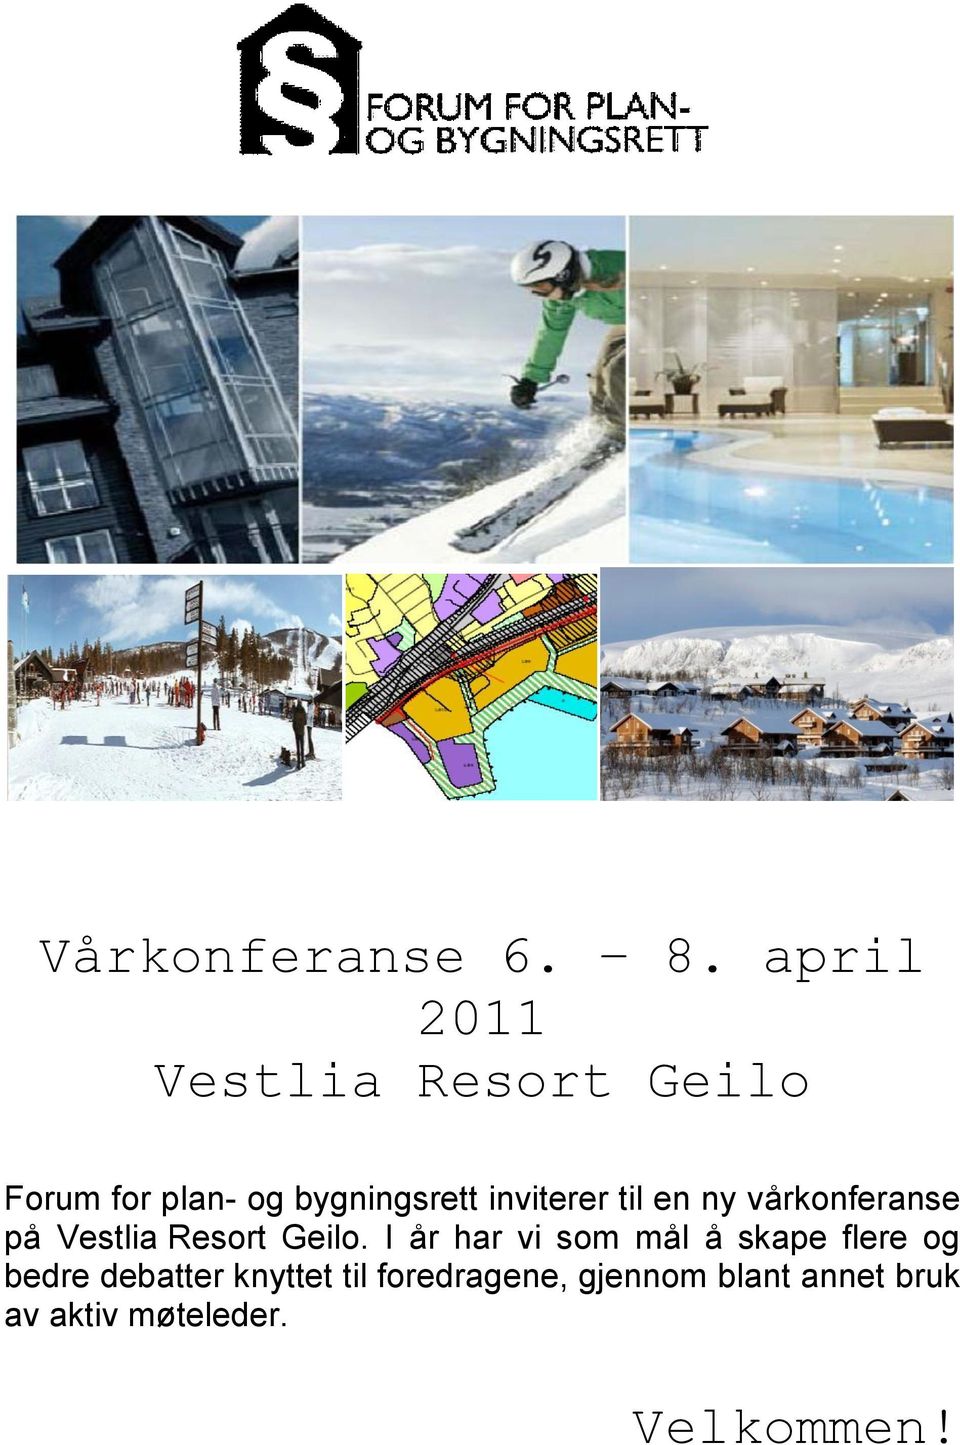 inviterer til en ny vårkonferanse på Vestlia Resort Geilo.